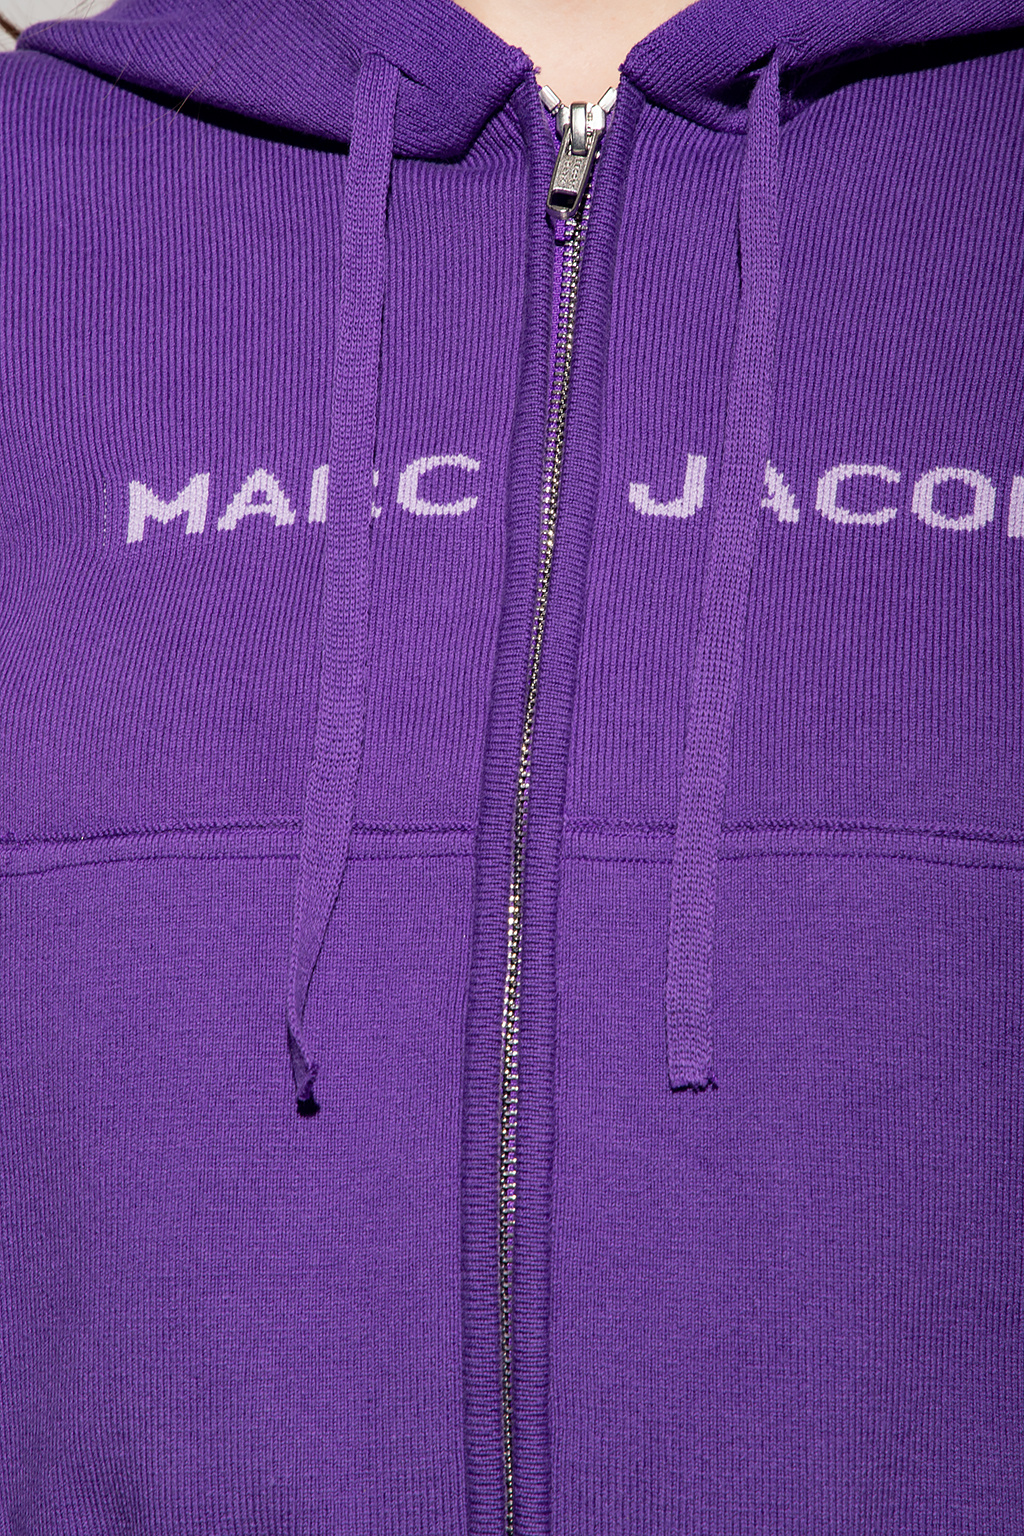 Marc Jacobs marc jacobs eyewear oversized double nose bridge glasses item